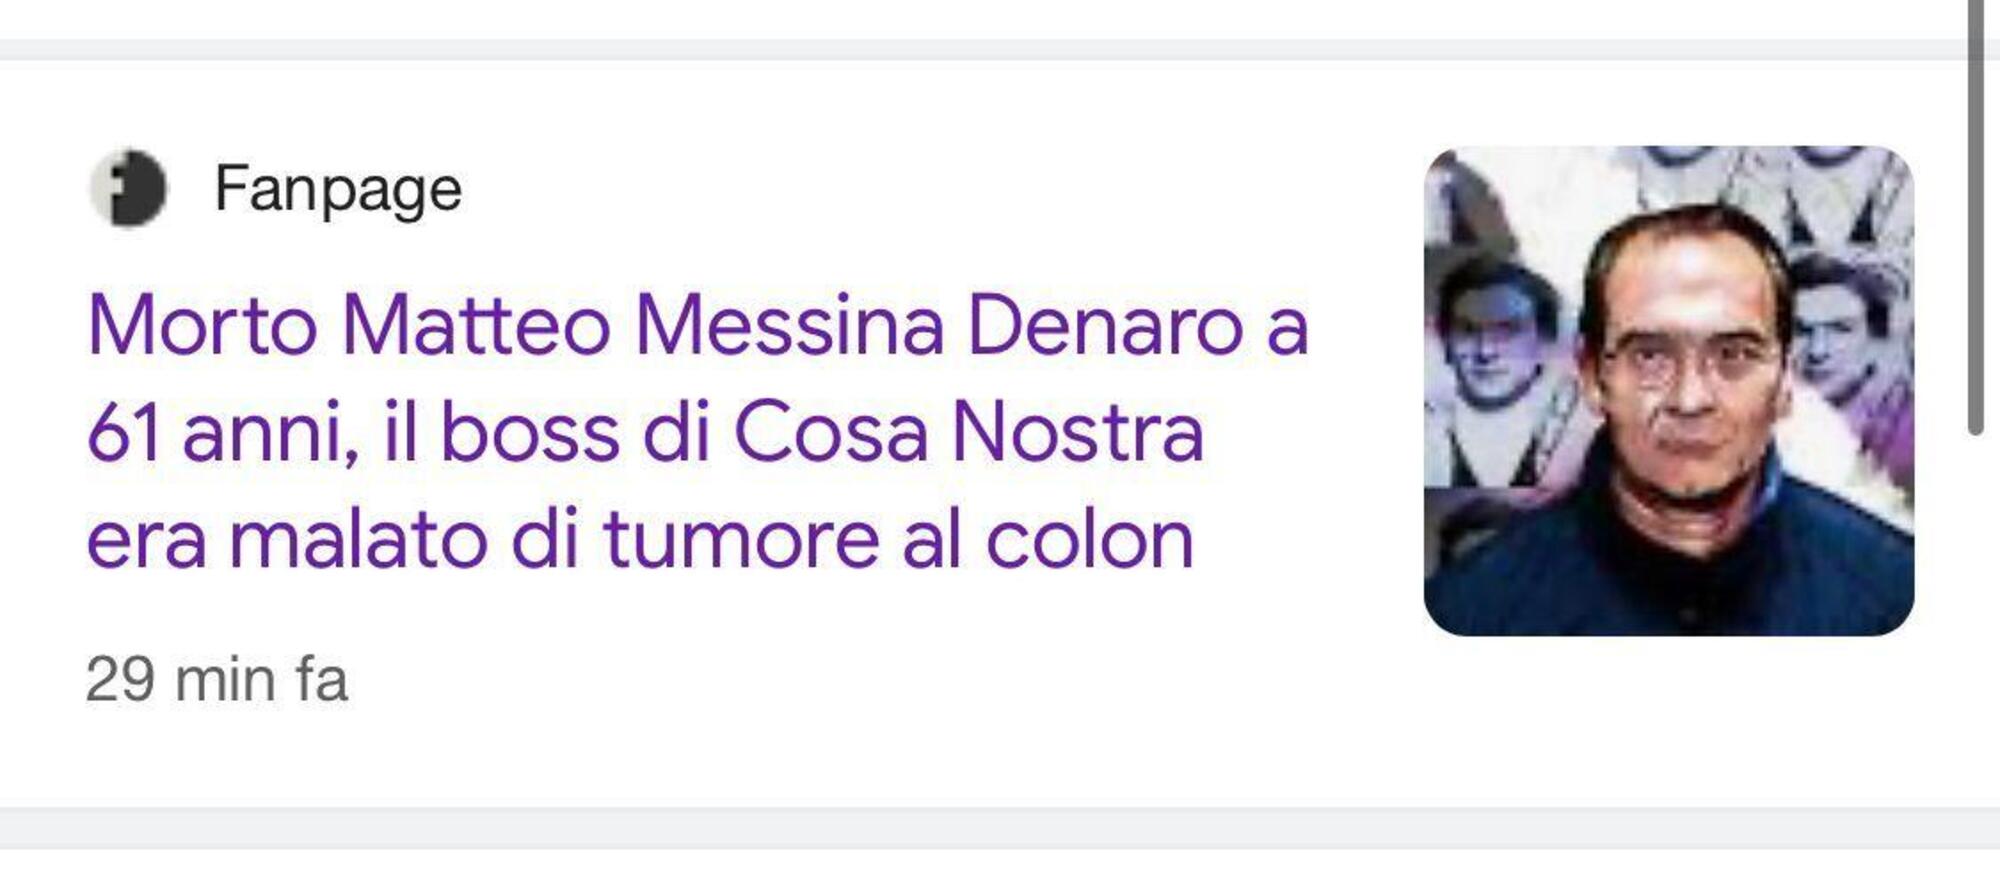 Matteo Messina Denaro gi&agrave; morto ieri per Fanpage